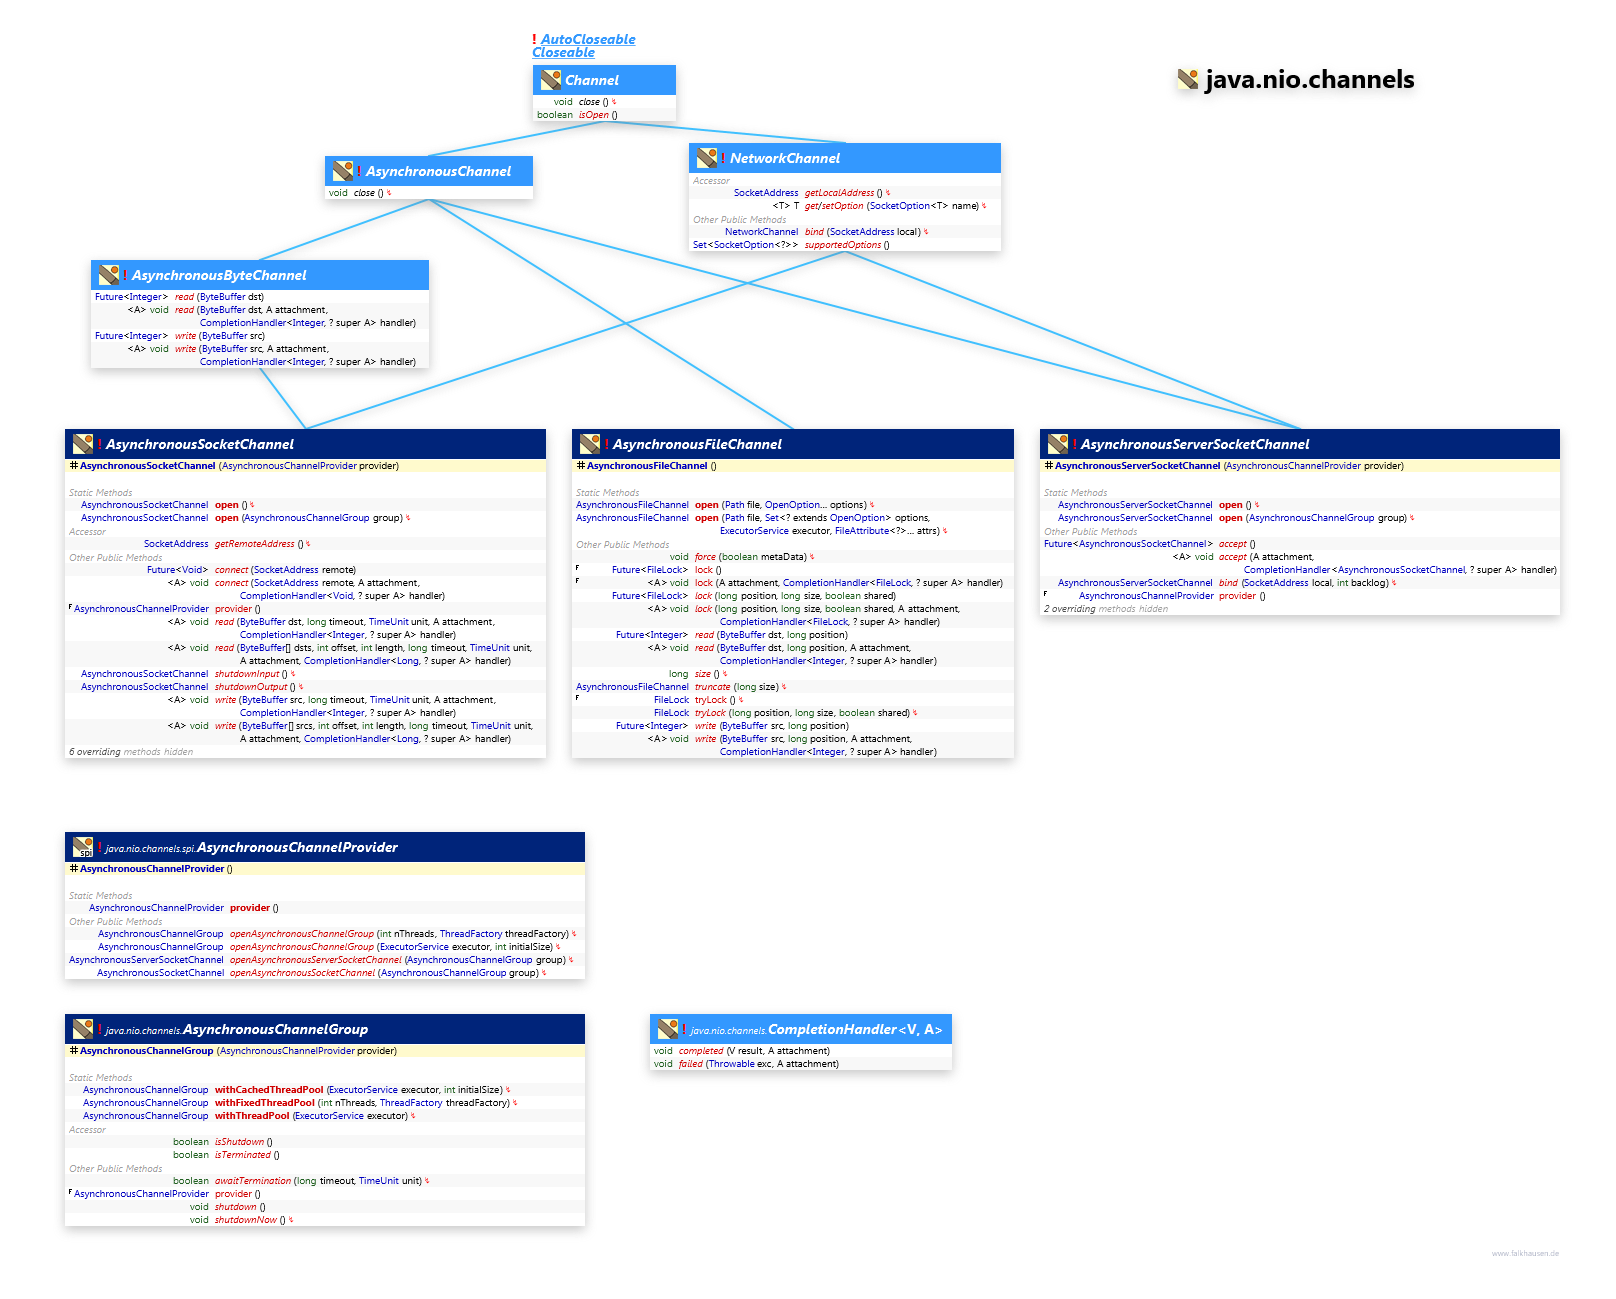 java.nio.channels AsynchronousChannel class diagram and api documentation for Java 7